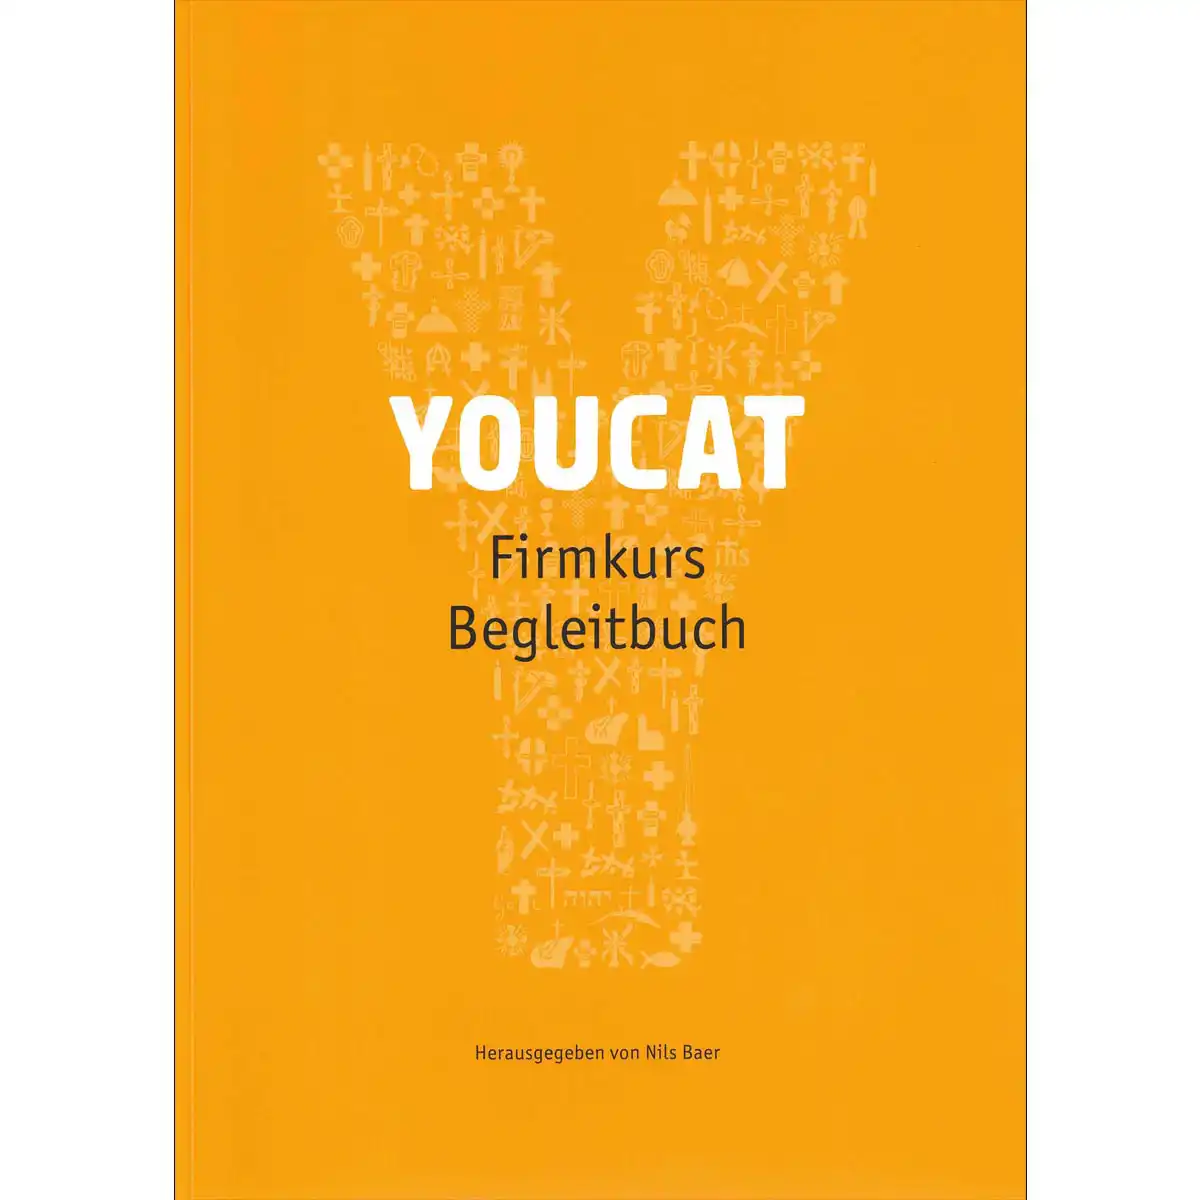 YOUCAT Firmkurs Begleitbuch für Gruppenleiter